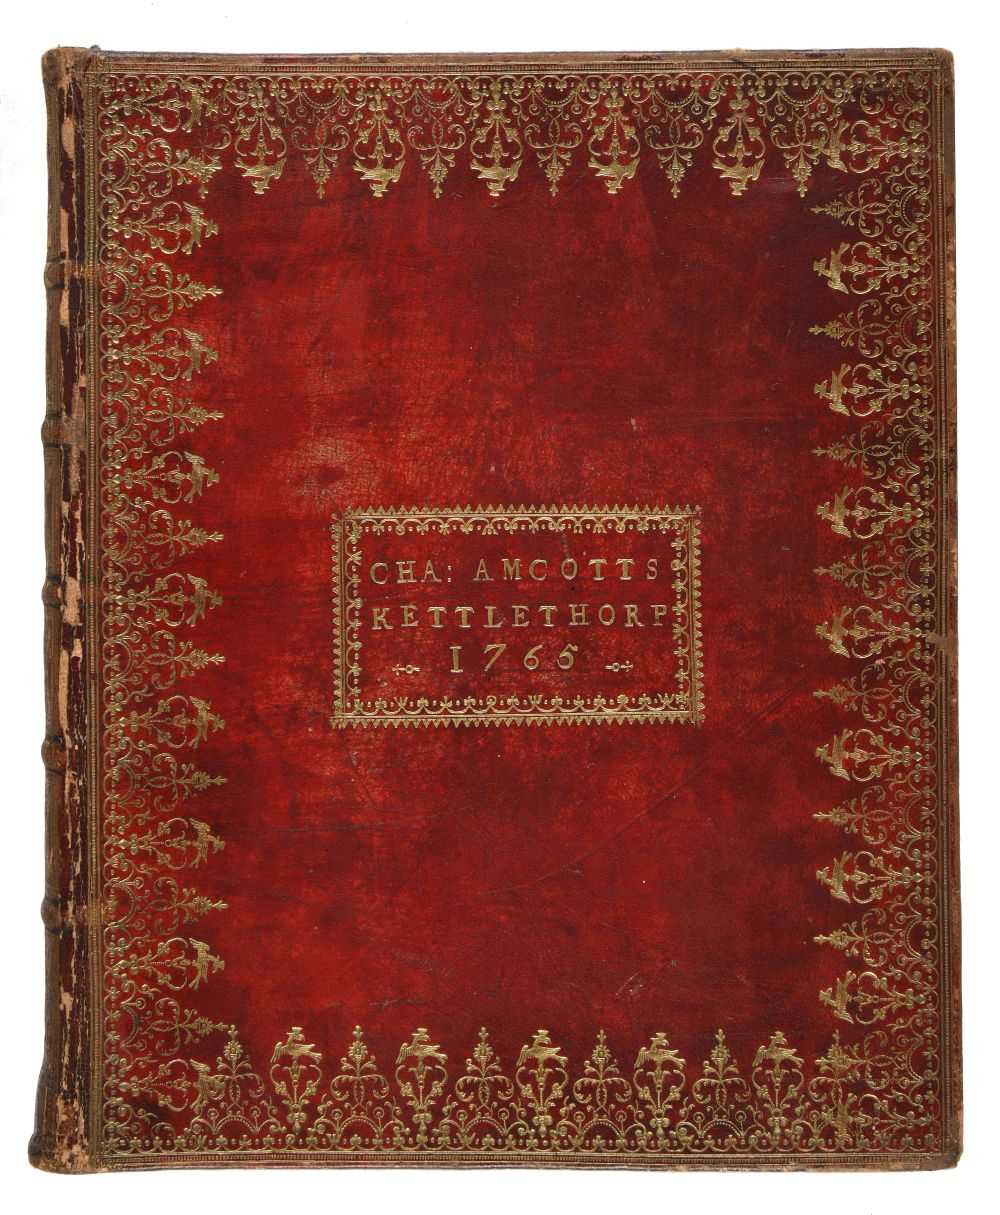 Lot 340 - Book of Common Prayer, 1758